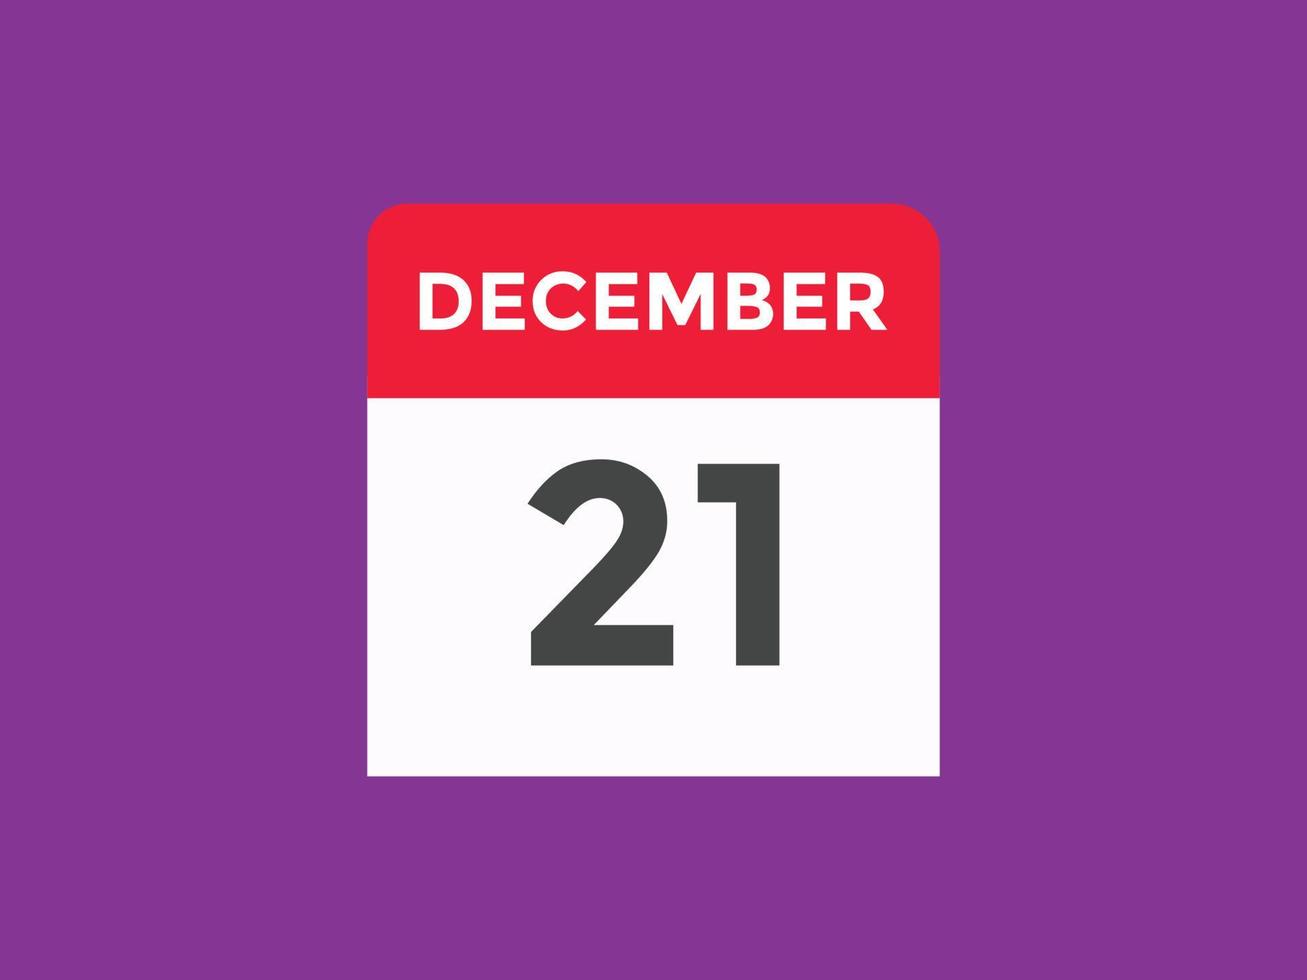 december 21 calendar reminder. 21th december daily calendar icon template. Calendar 21th december icon Design template. Vector illustration